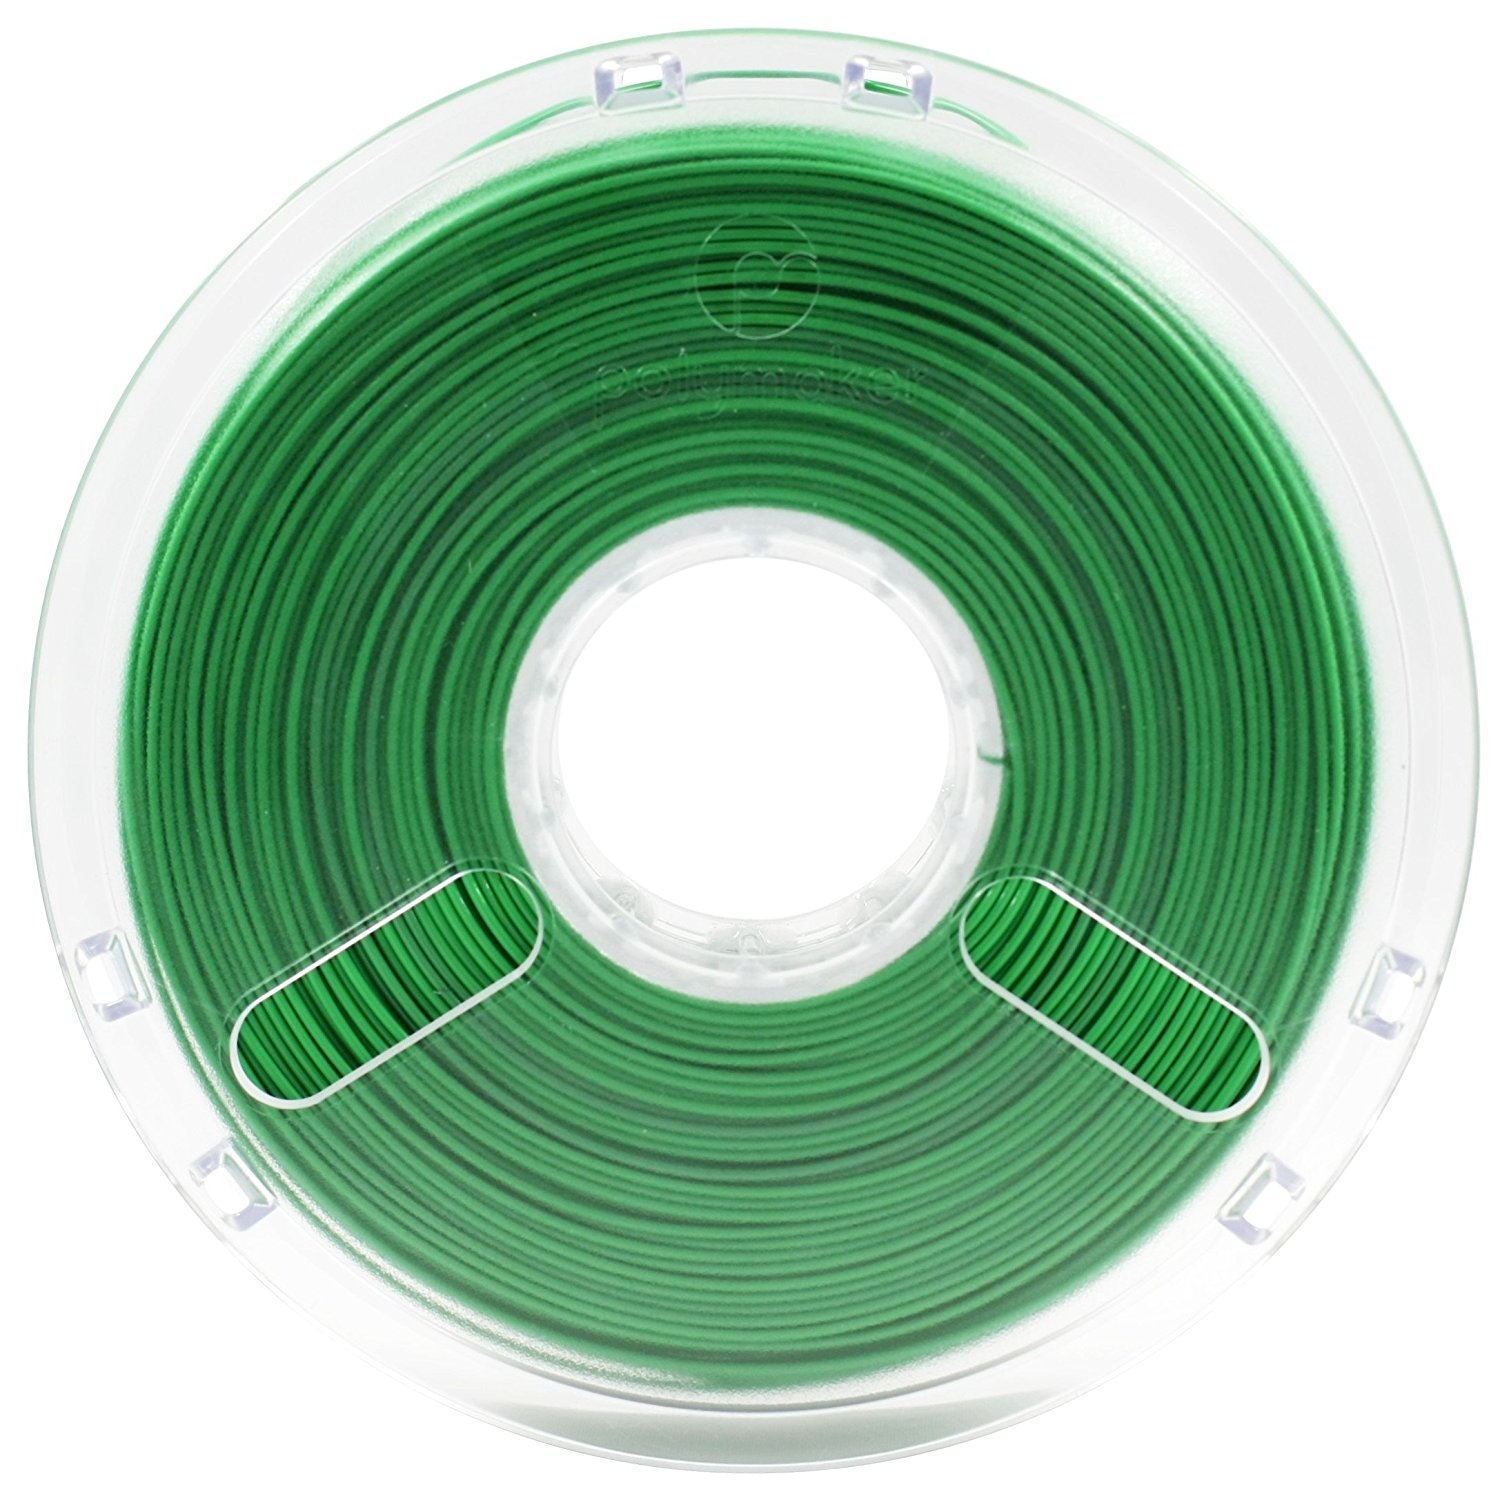 Polymaker PolyMax True Green PLA 1.75 mm 750g